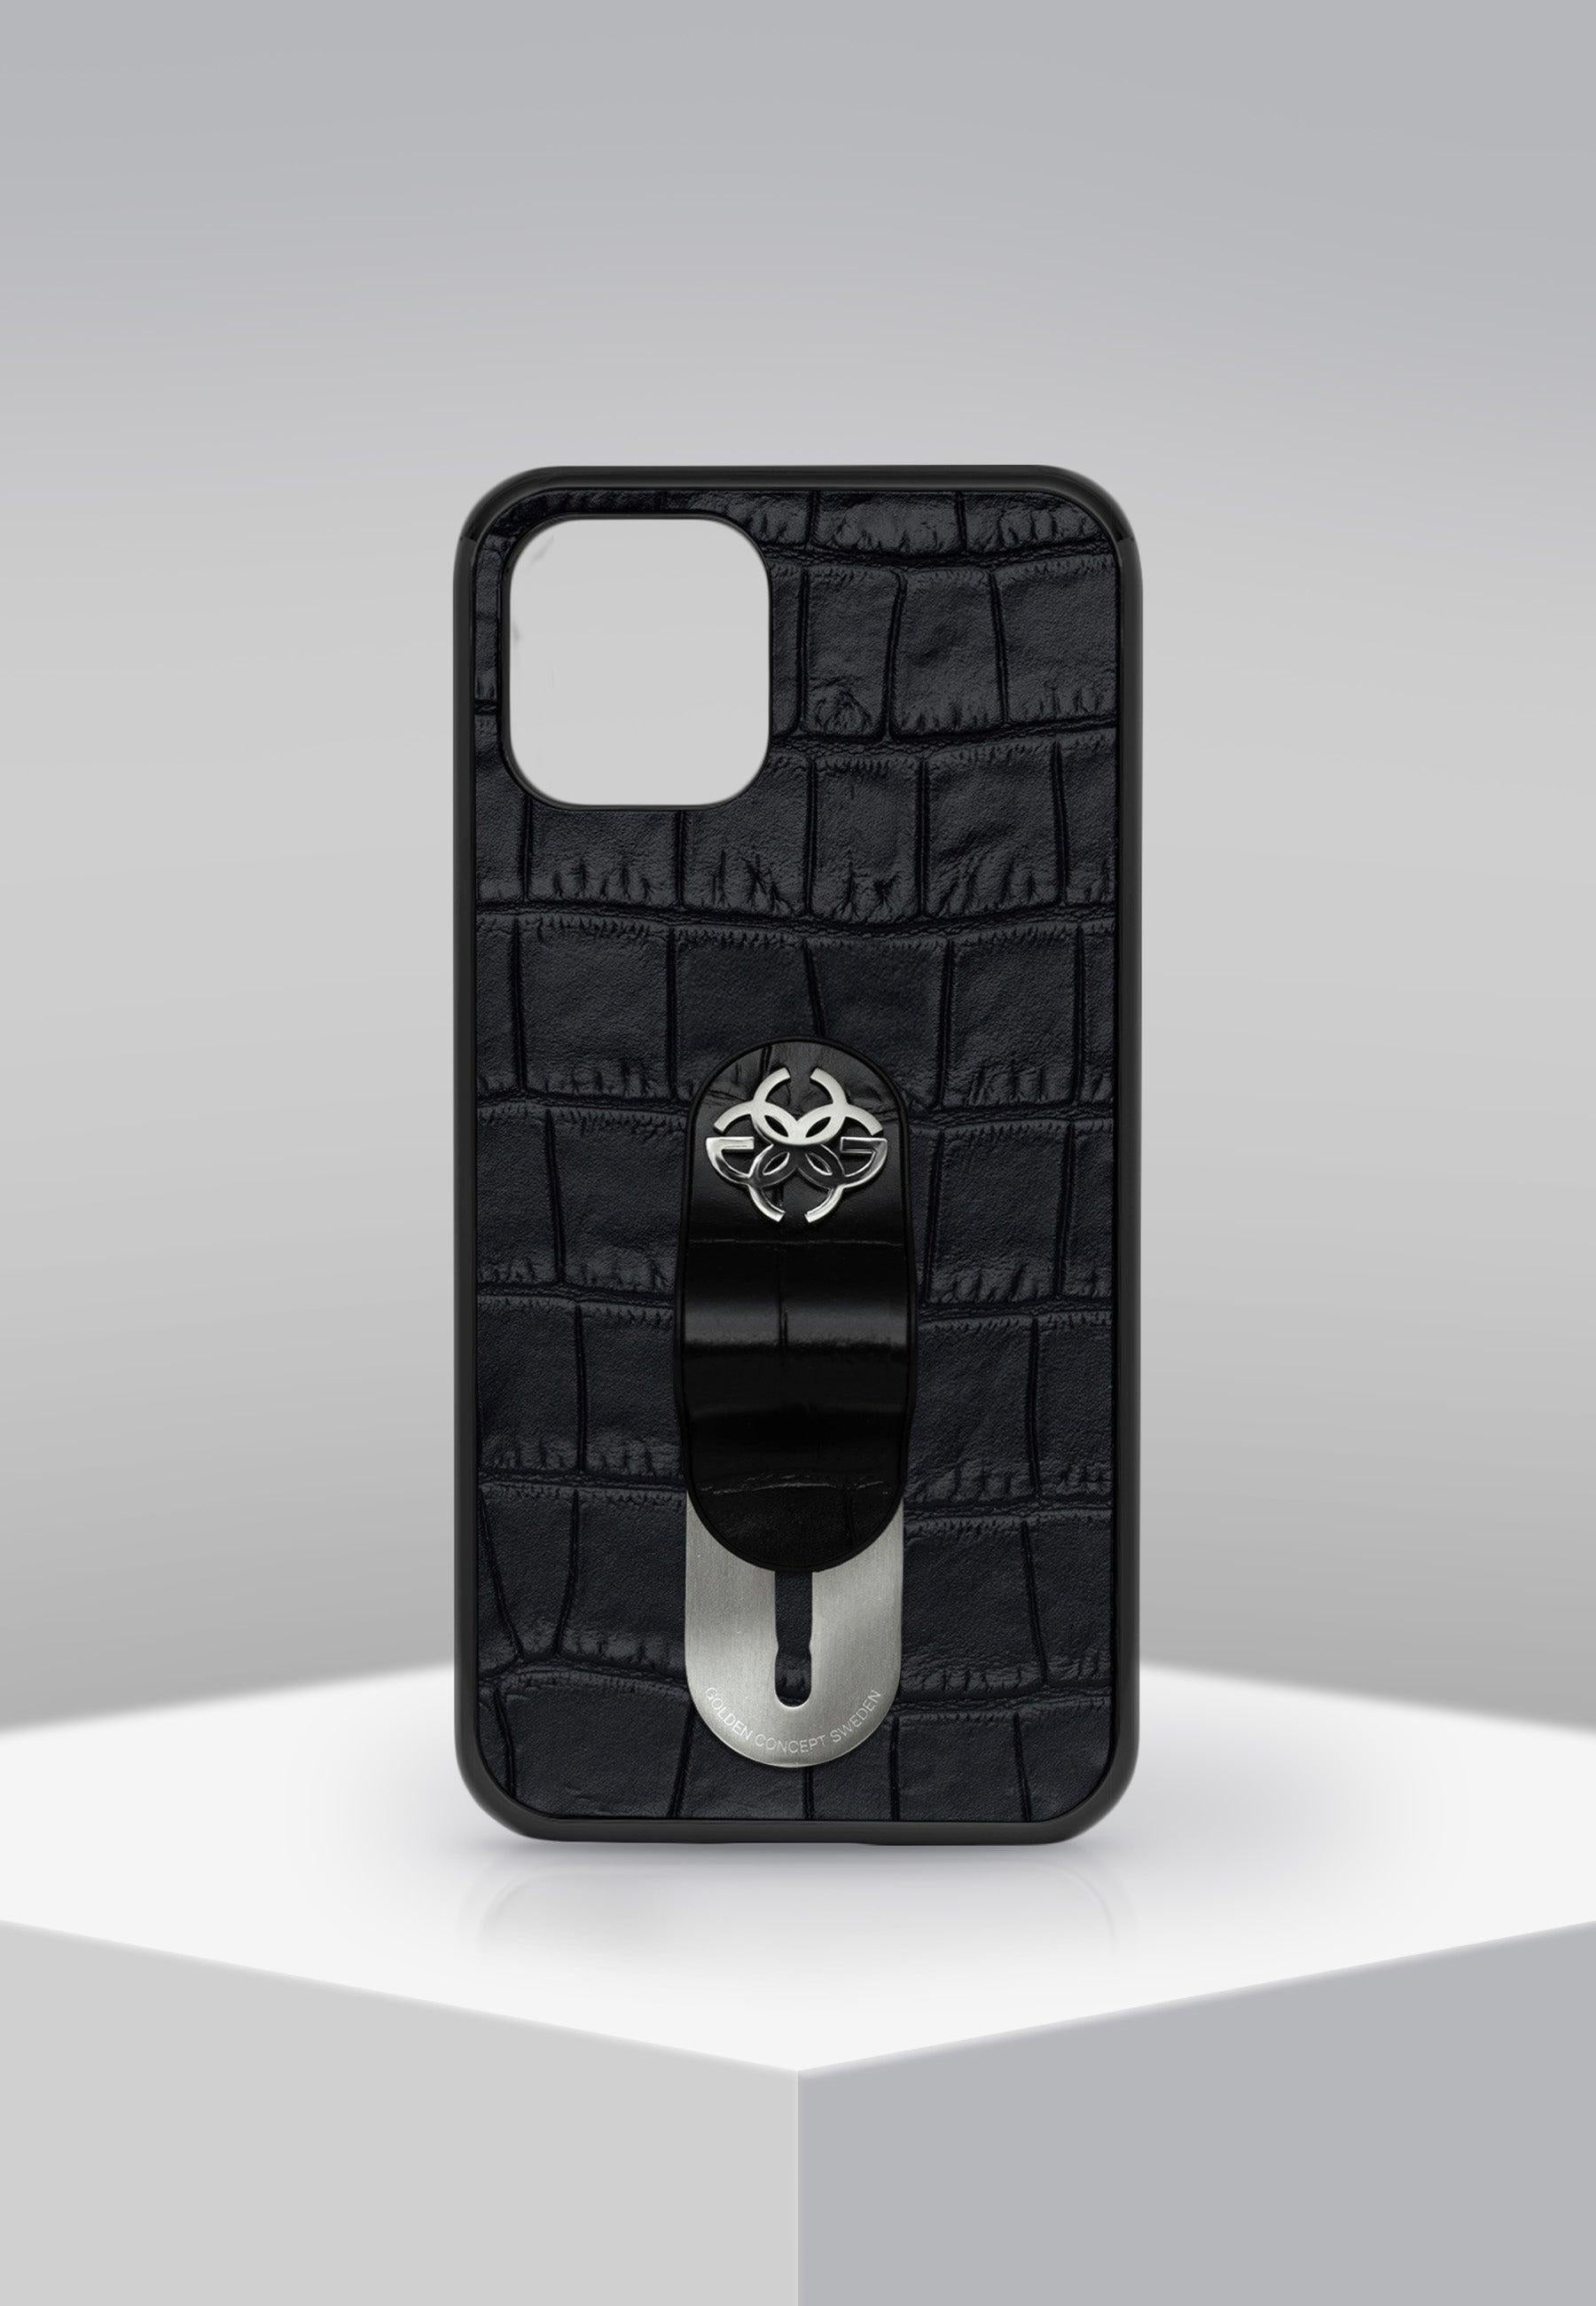 Buy Golden Concept Iphone 12 Pro Max Black + Silver Strap Edition Case Online